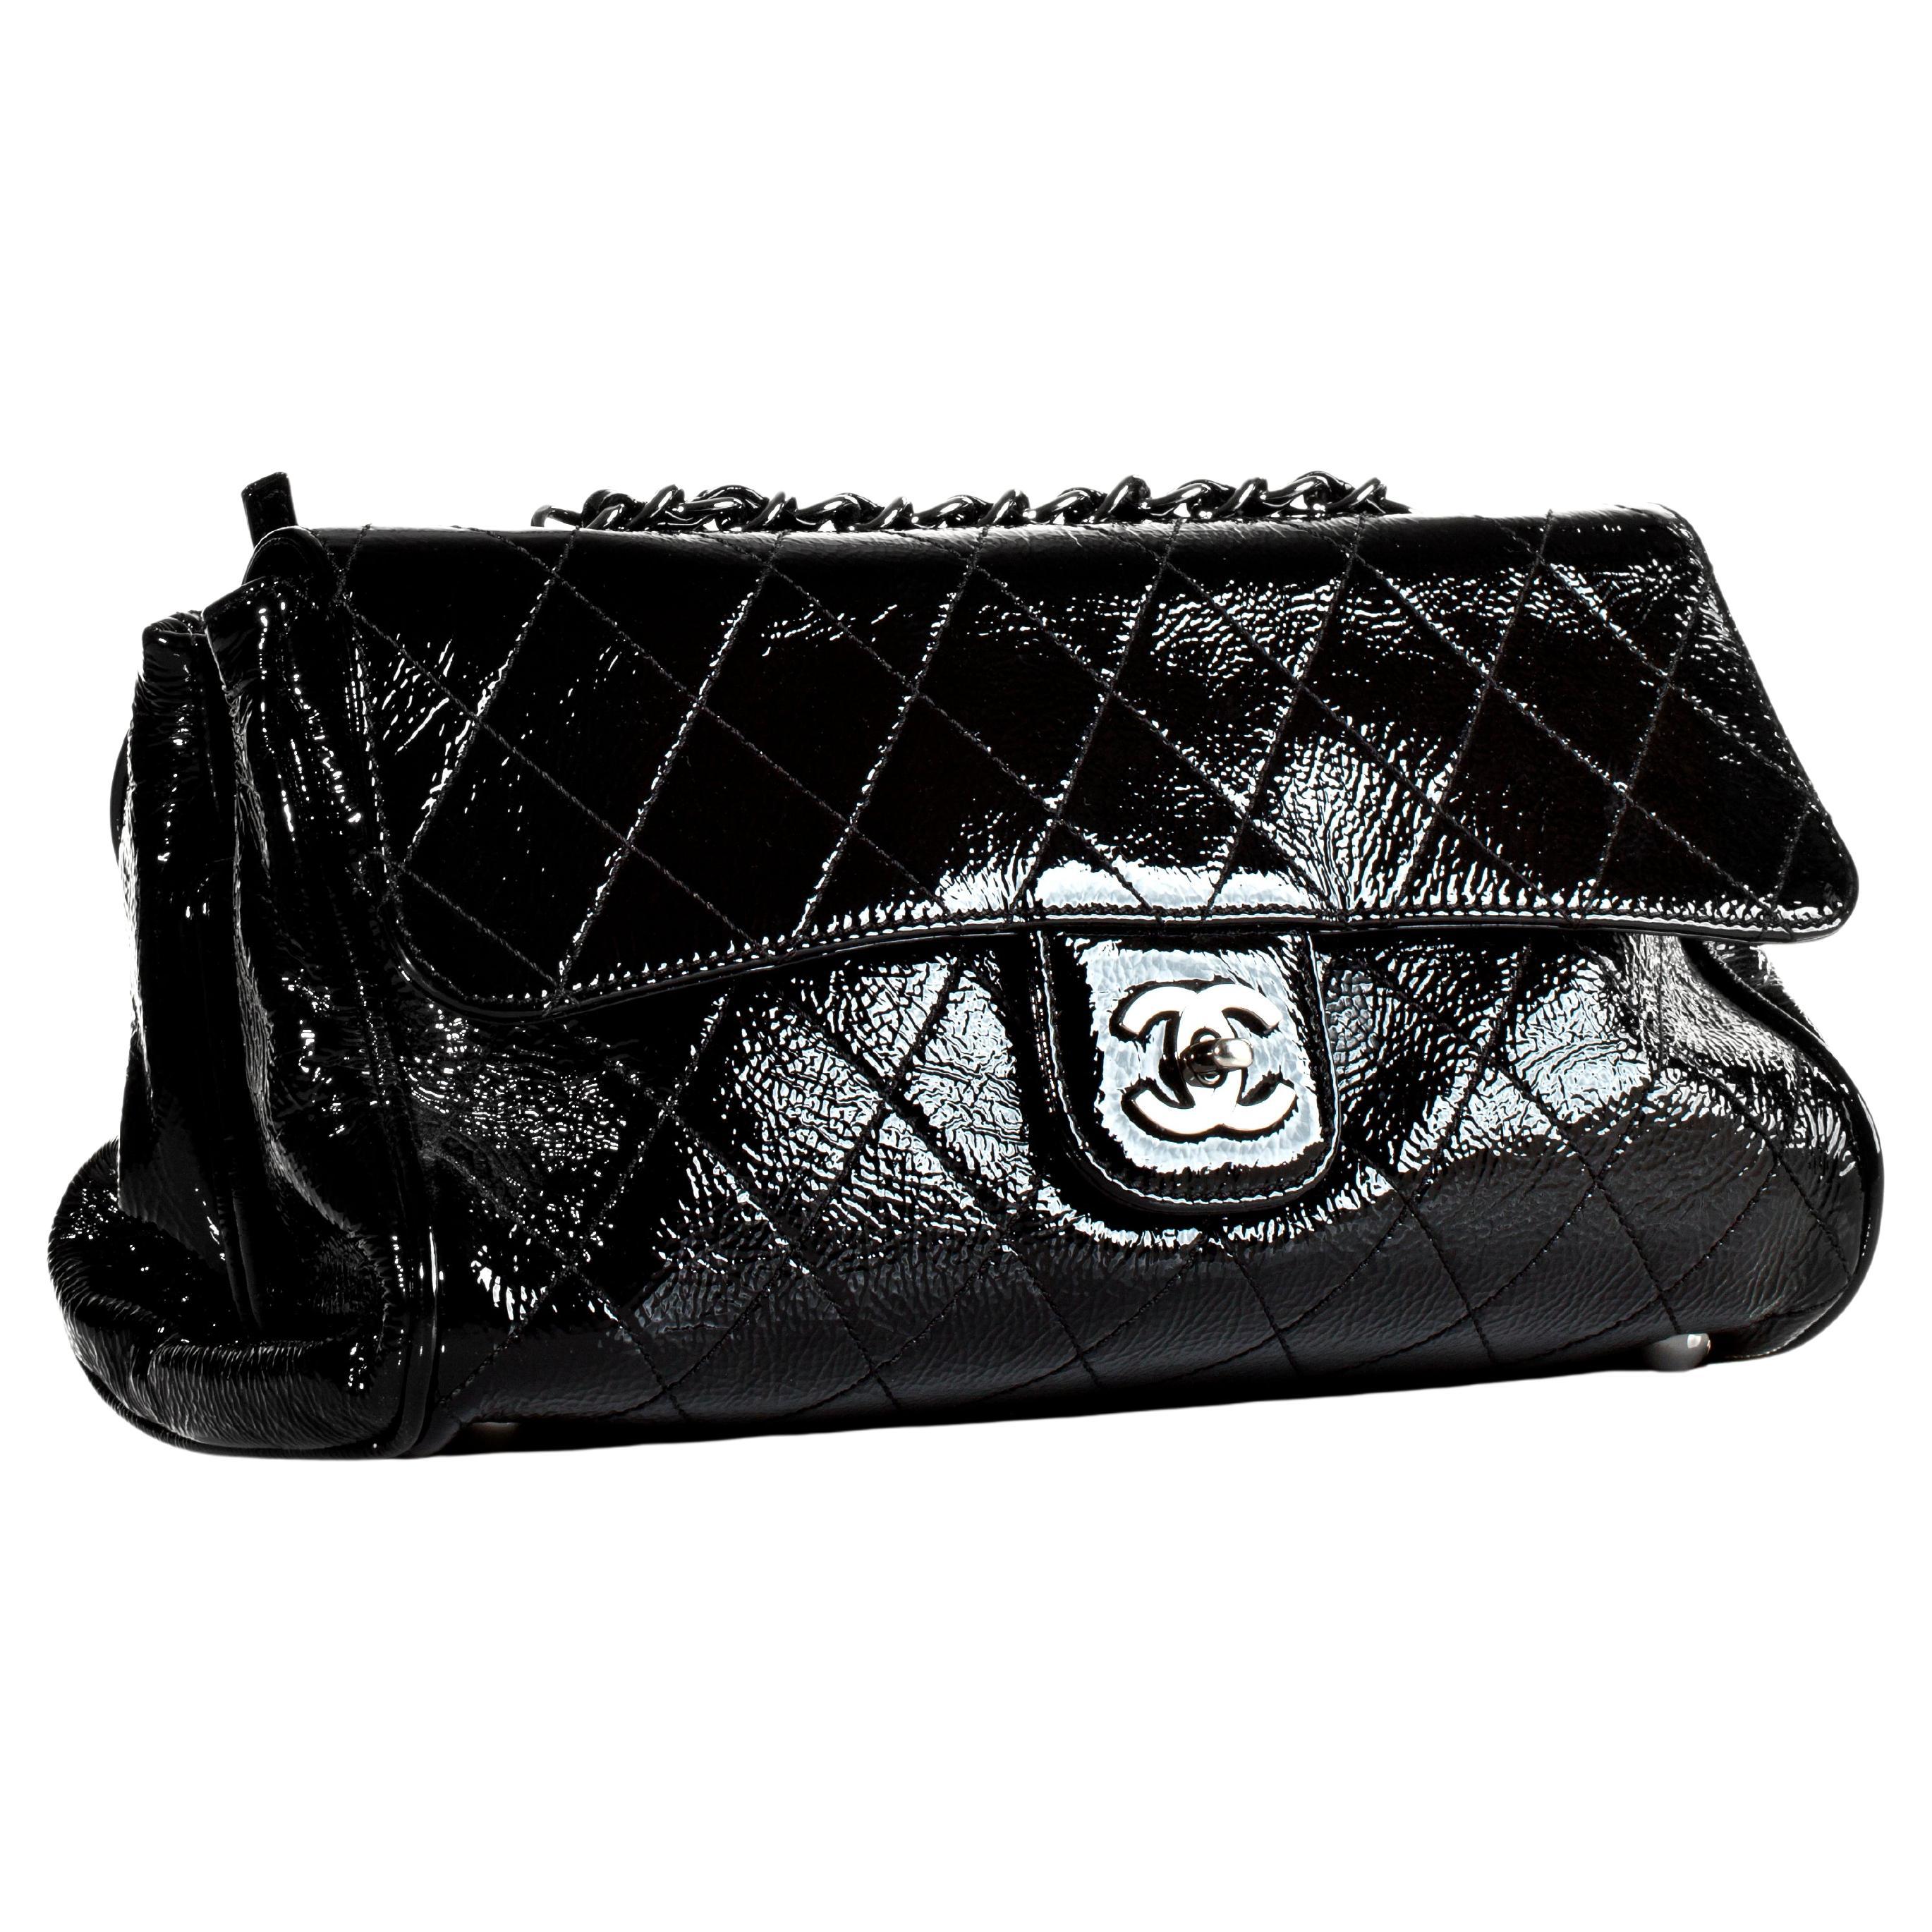 Chanel 2006 Small Patent Flap Bag Kiss lock Multi Compartment Shoulder Tote Bag Bon état - En vente à Miami, FL